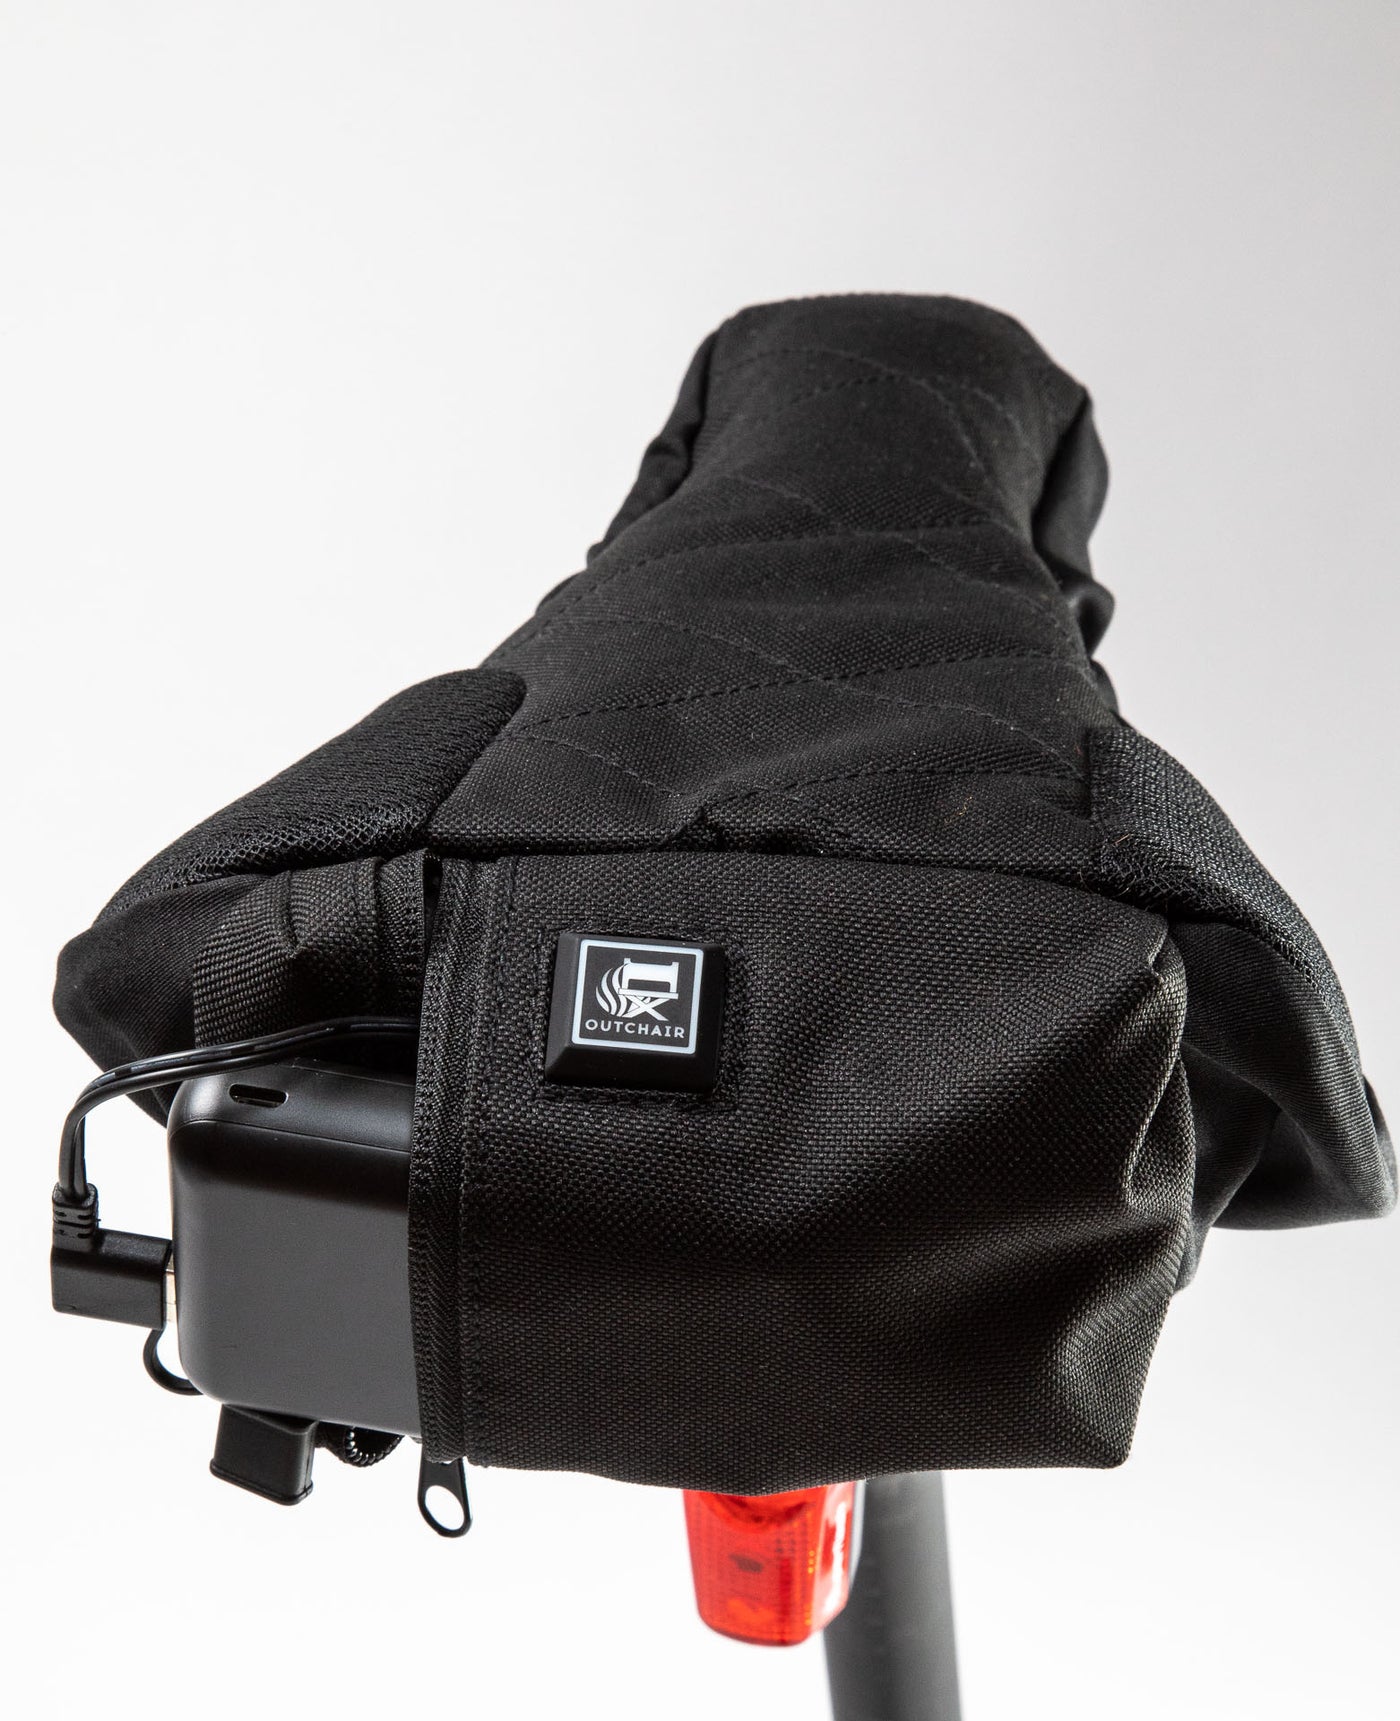 Easy Rider - Saddle warmer - Outchair_GmbH